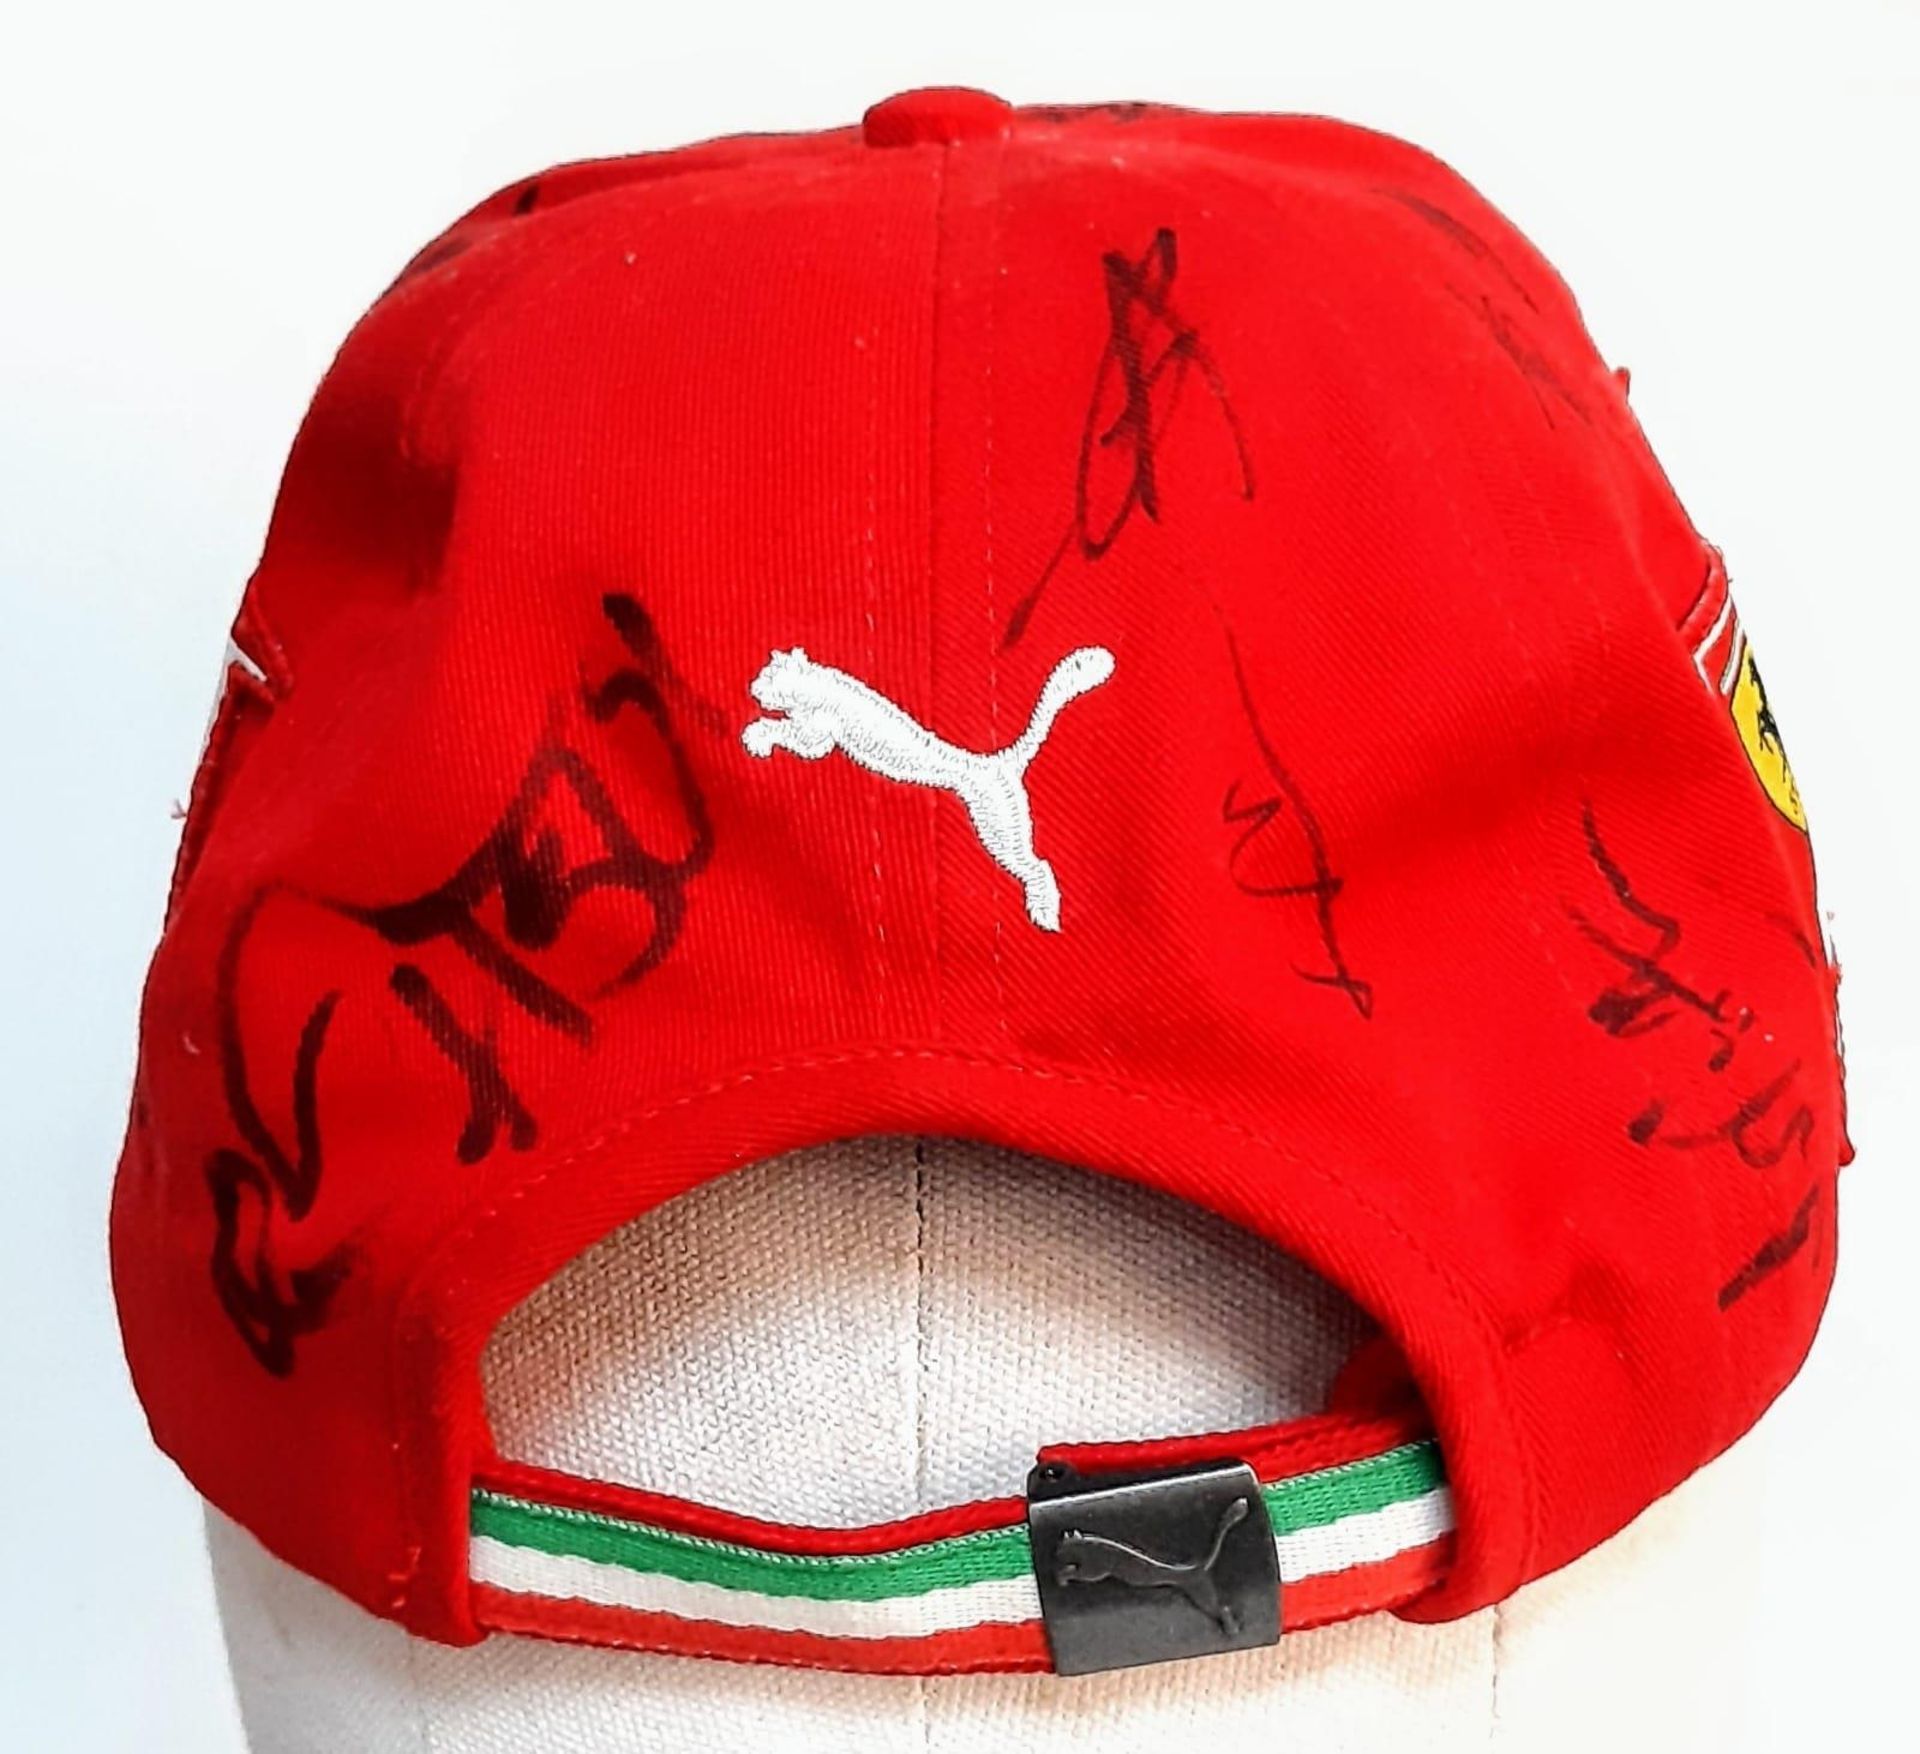 An Official Ferrari Team Cap - Over 20 signatures including Ferrari drivers and team principals. - Image 3 of 14